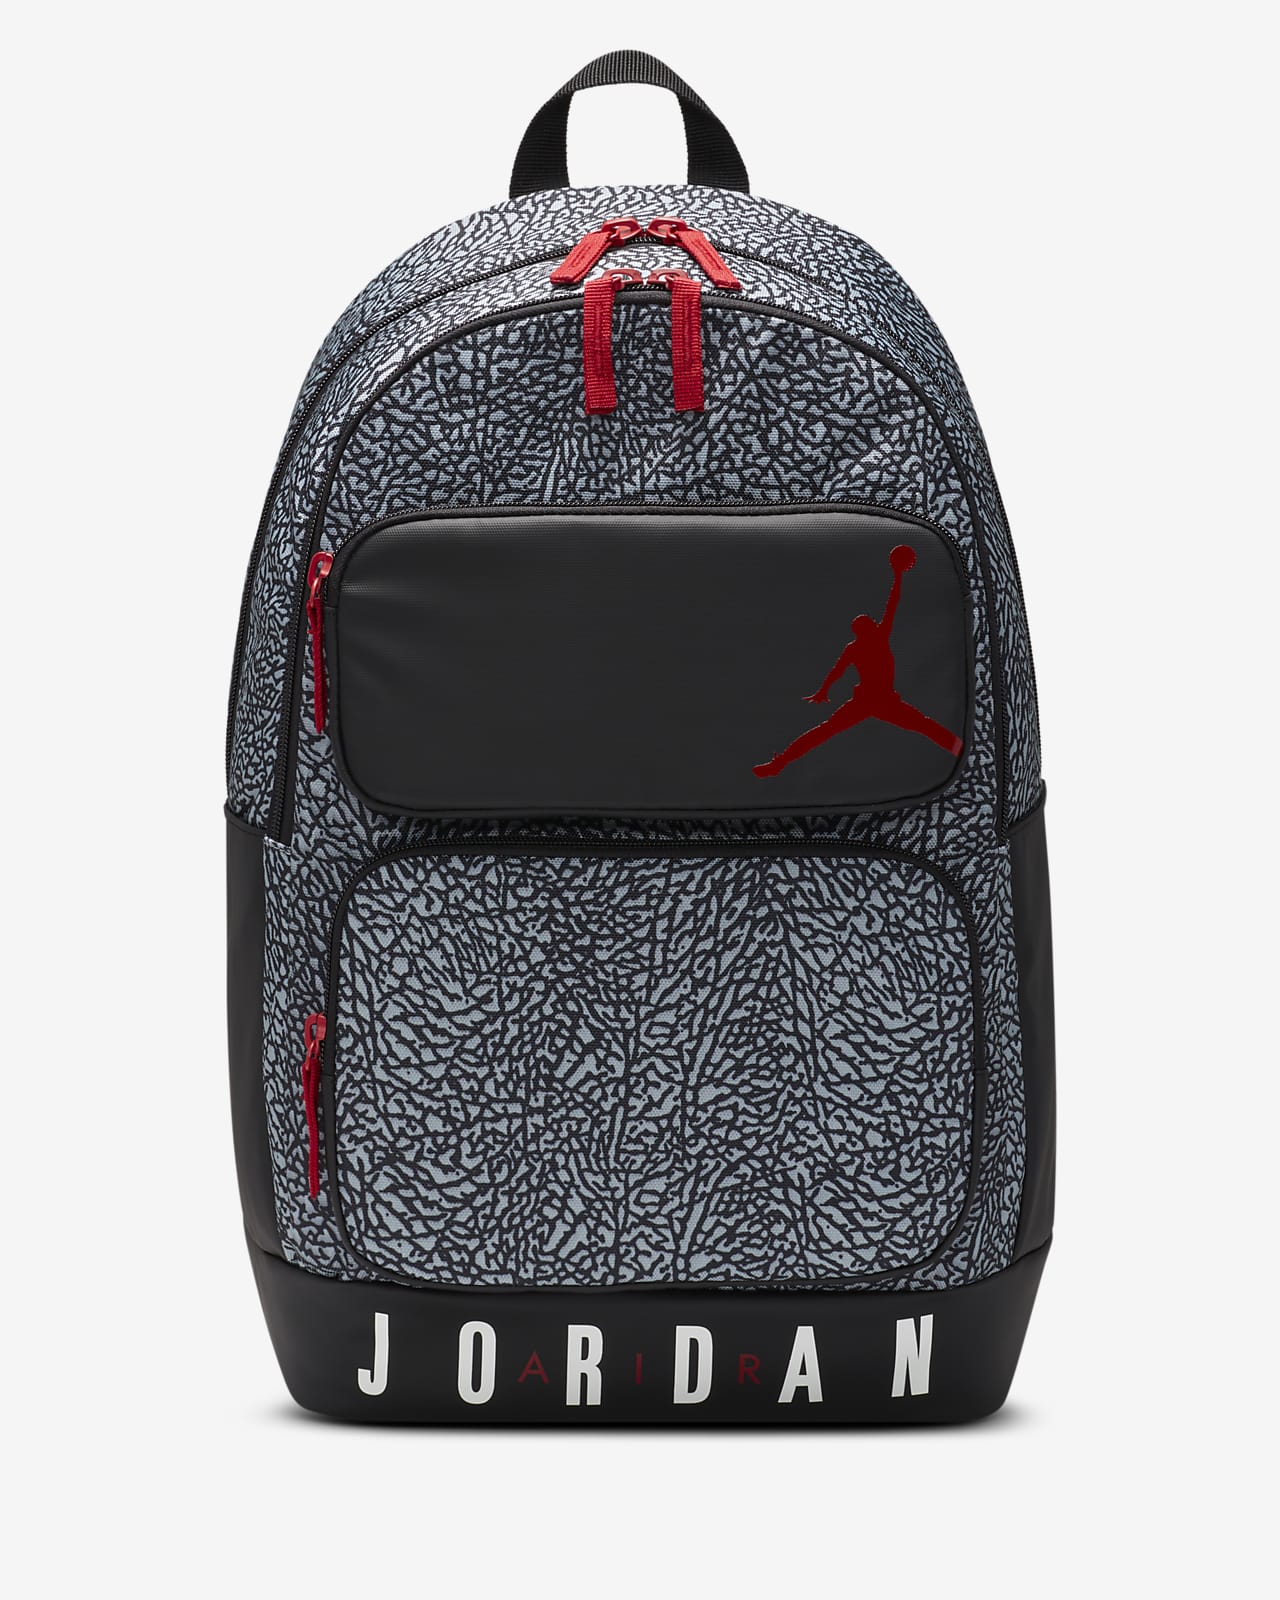 Mochila Jordan Nike.com